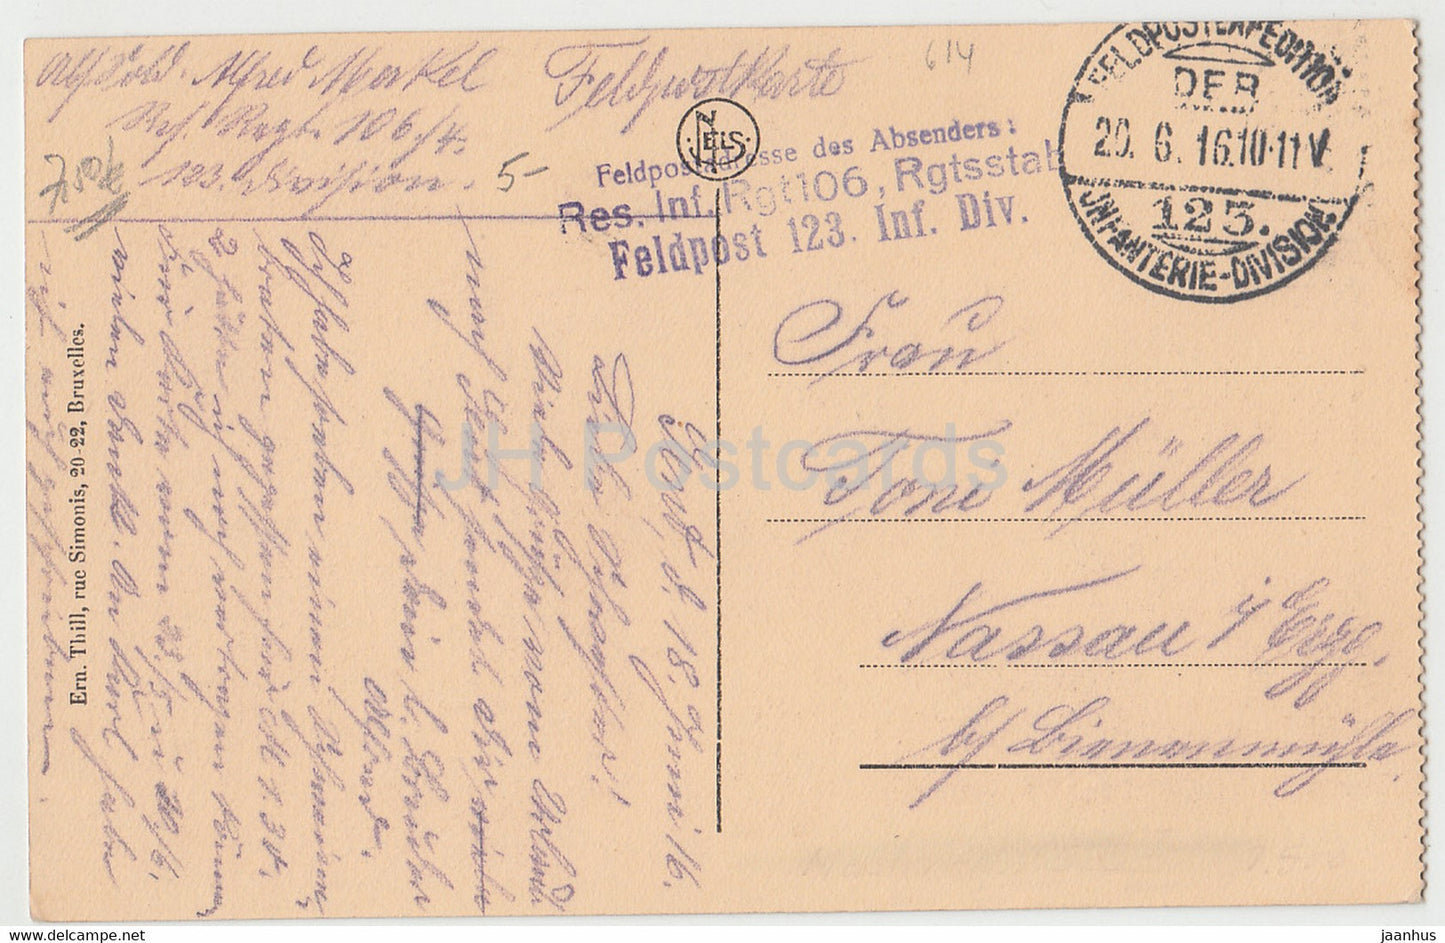 Gand - Gent - Beffroi Eglise St Nicolas et Panorama - Res Inf Rgt 106 - Feldpost - carte postale ancienne - 1916 - Belgique - occasion